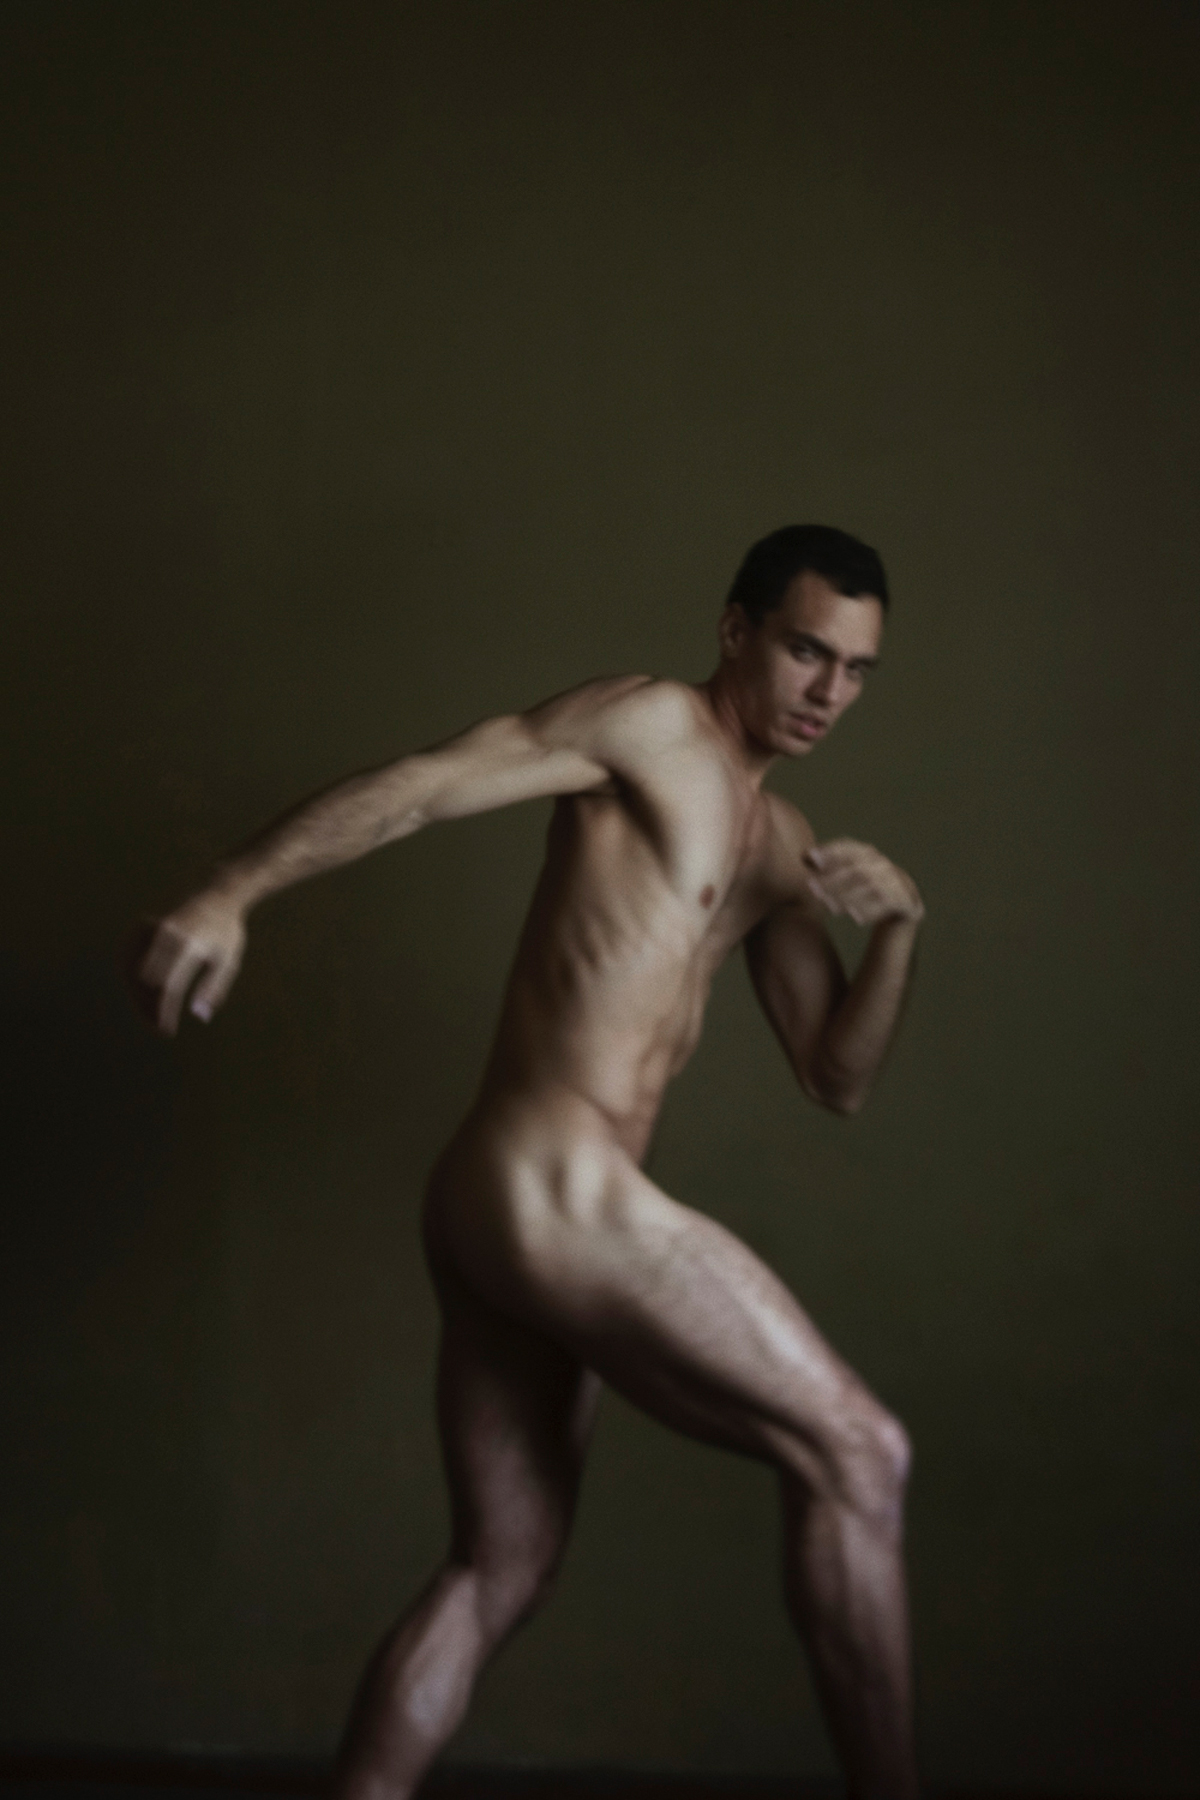 Francisco-gabriel-gets-naked-01-1 - PORNCEPTUAL